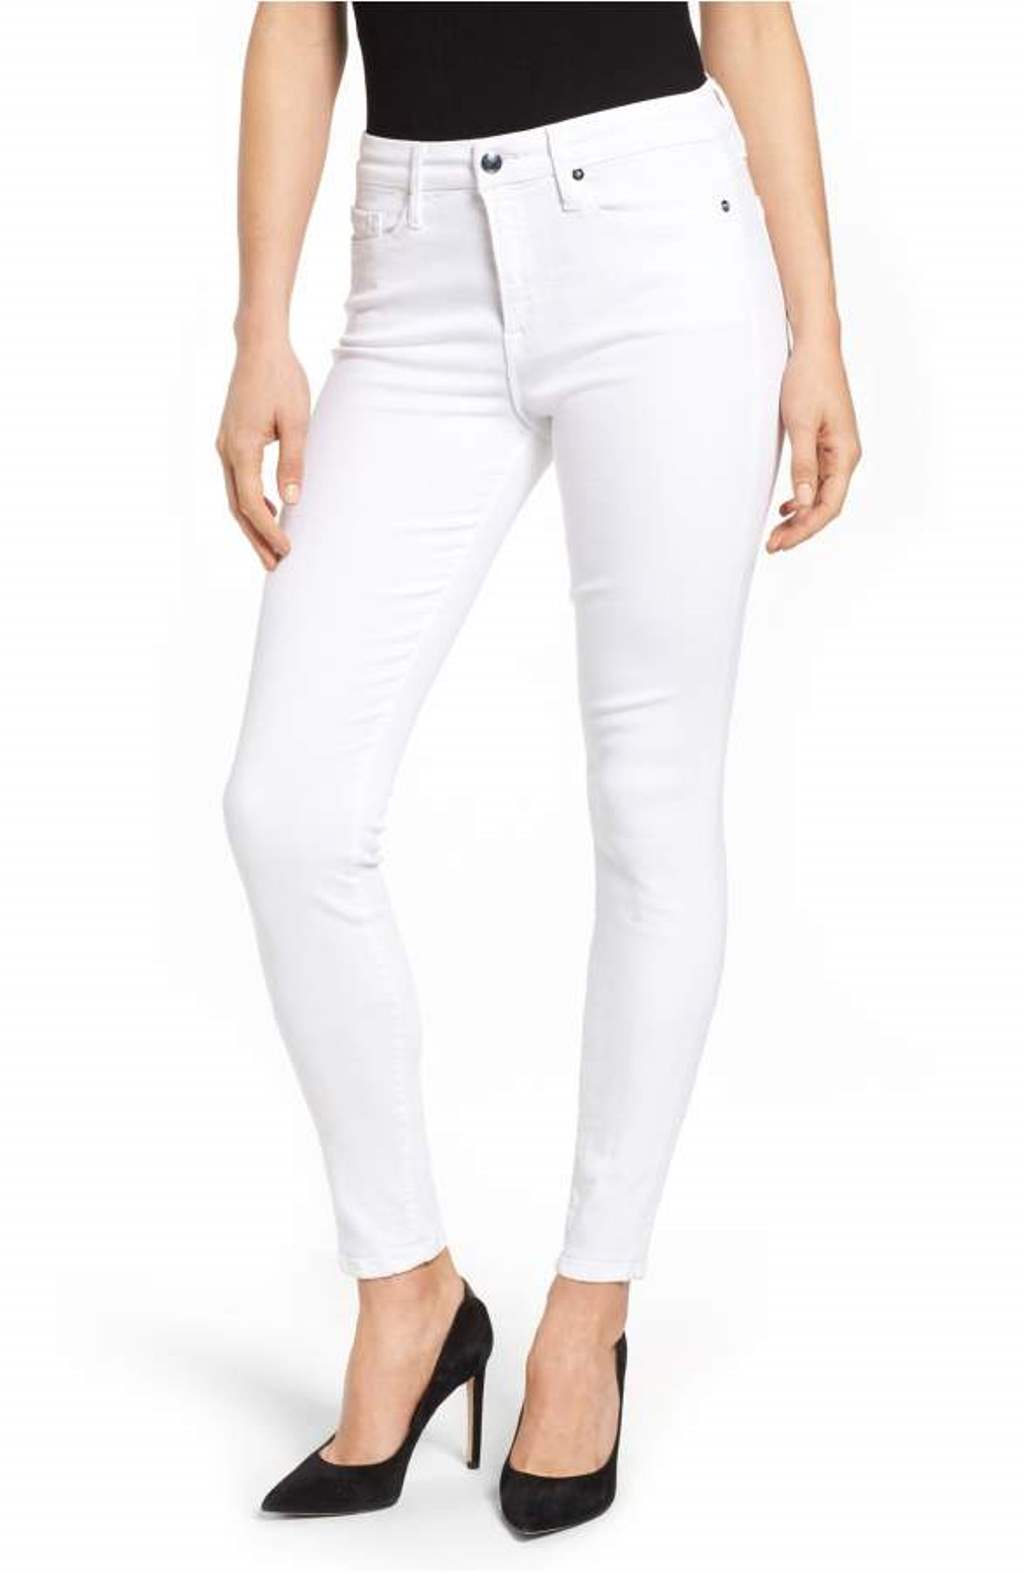 Buy Rock Hudson Women's White Jeans Online @ ₹745 from ShopClues